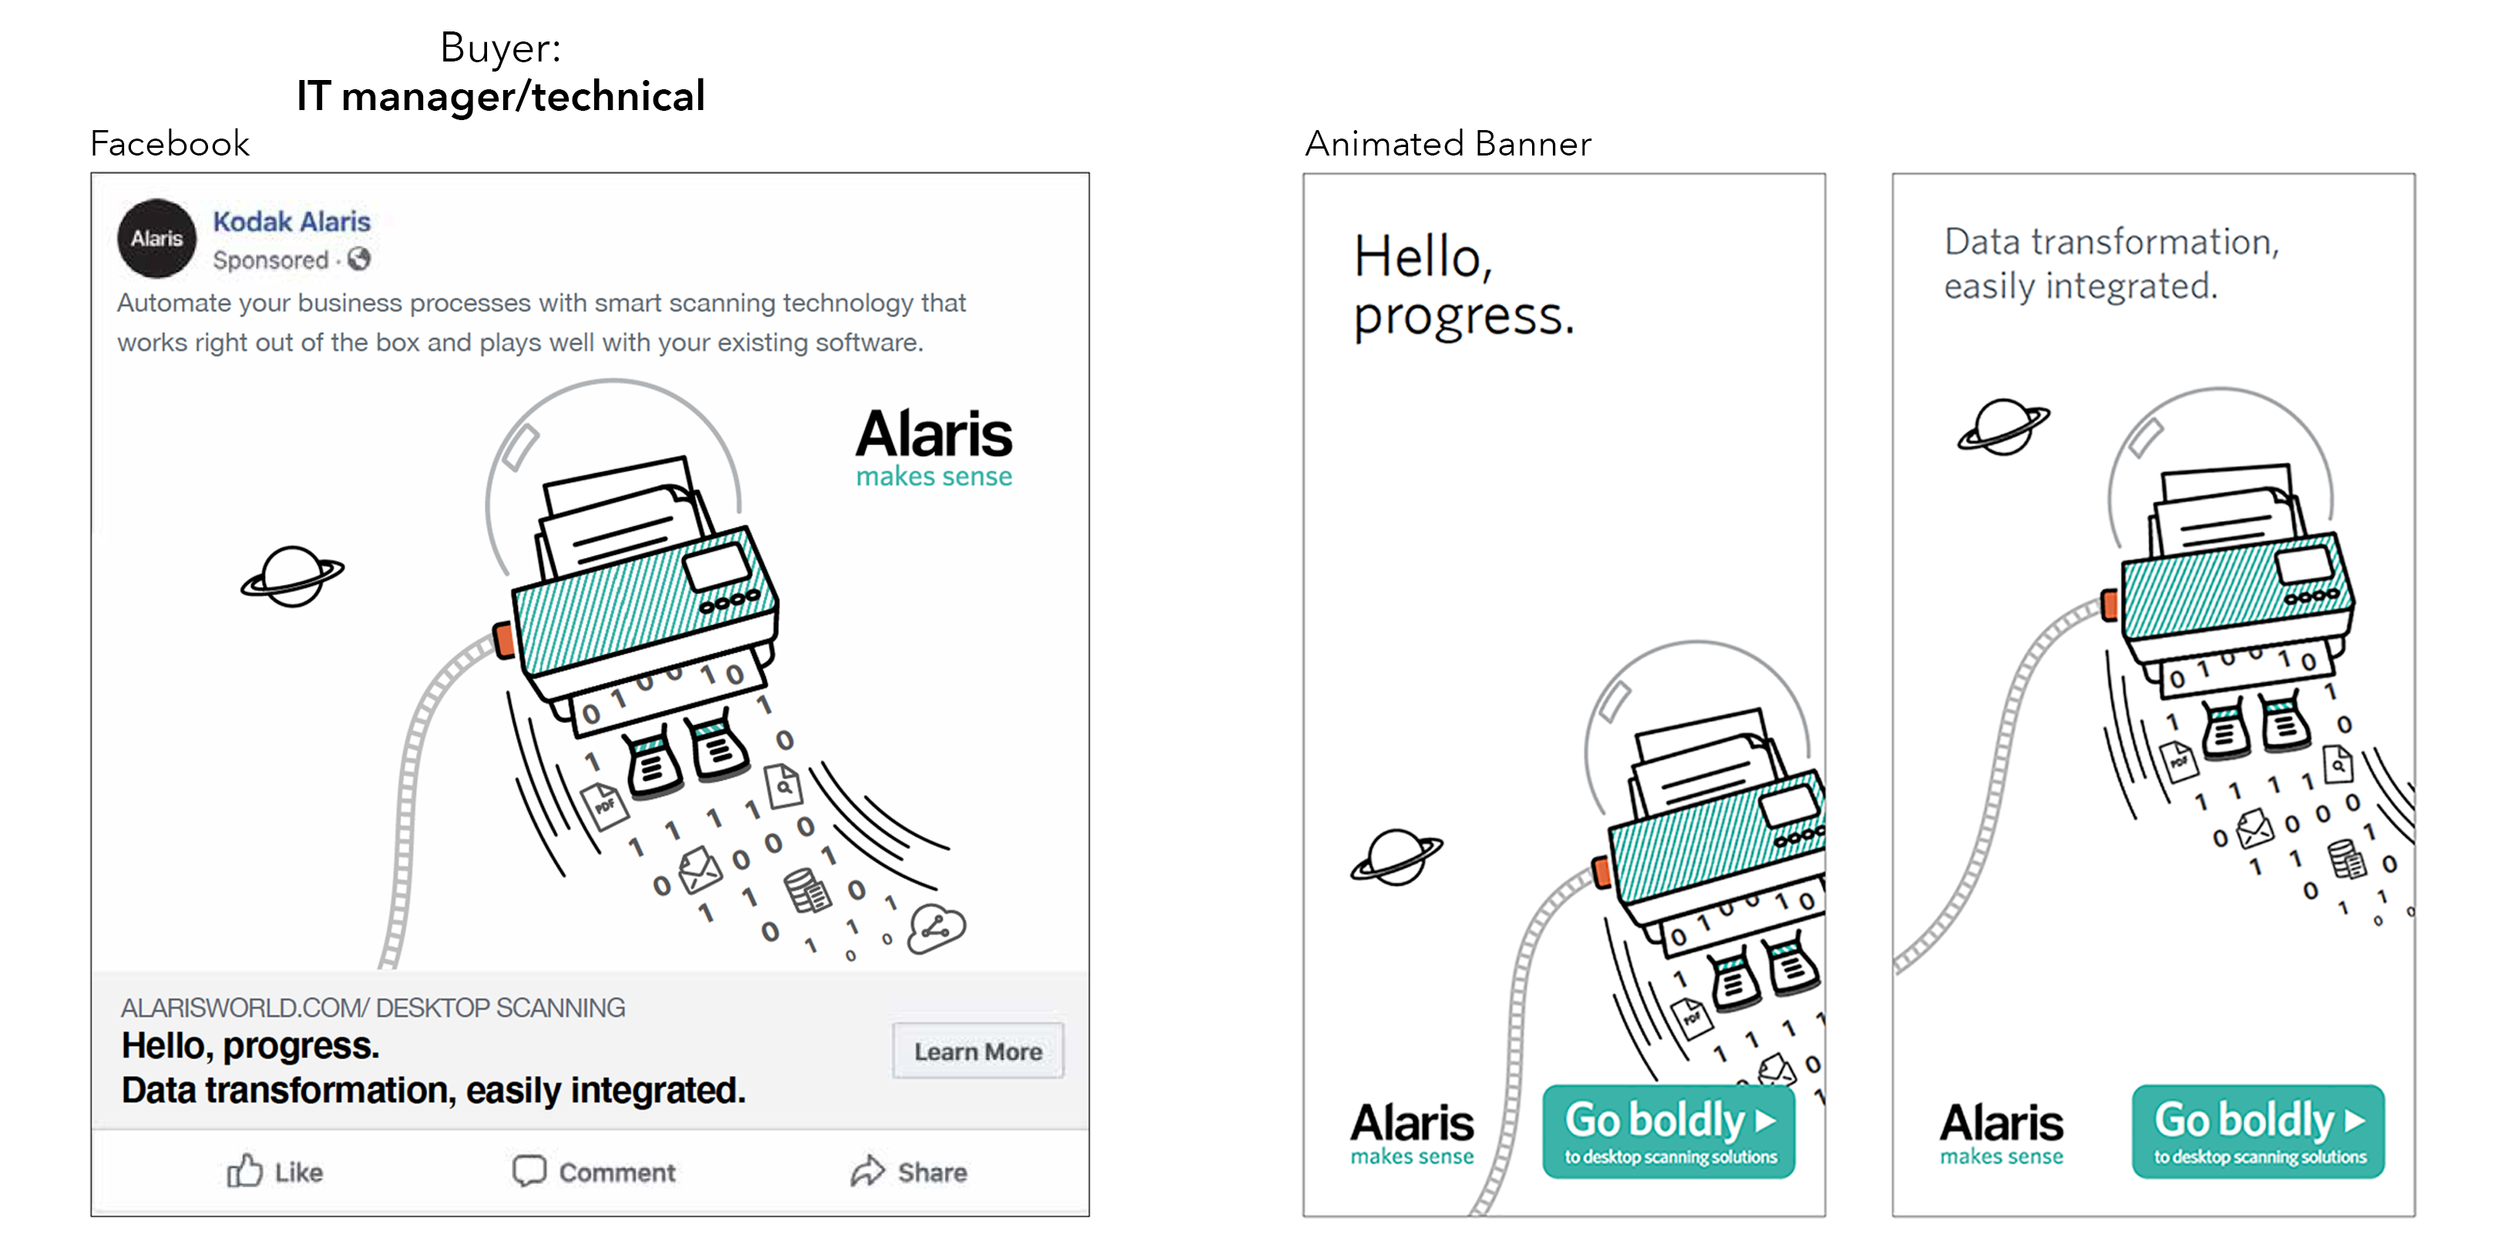 Alaris Technical Buyer Social Ad.png